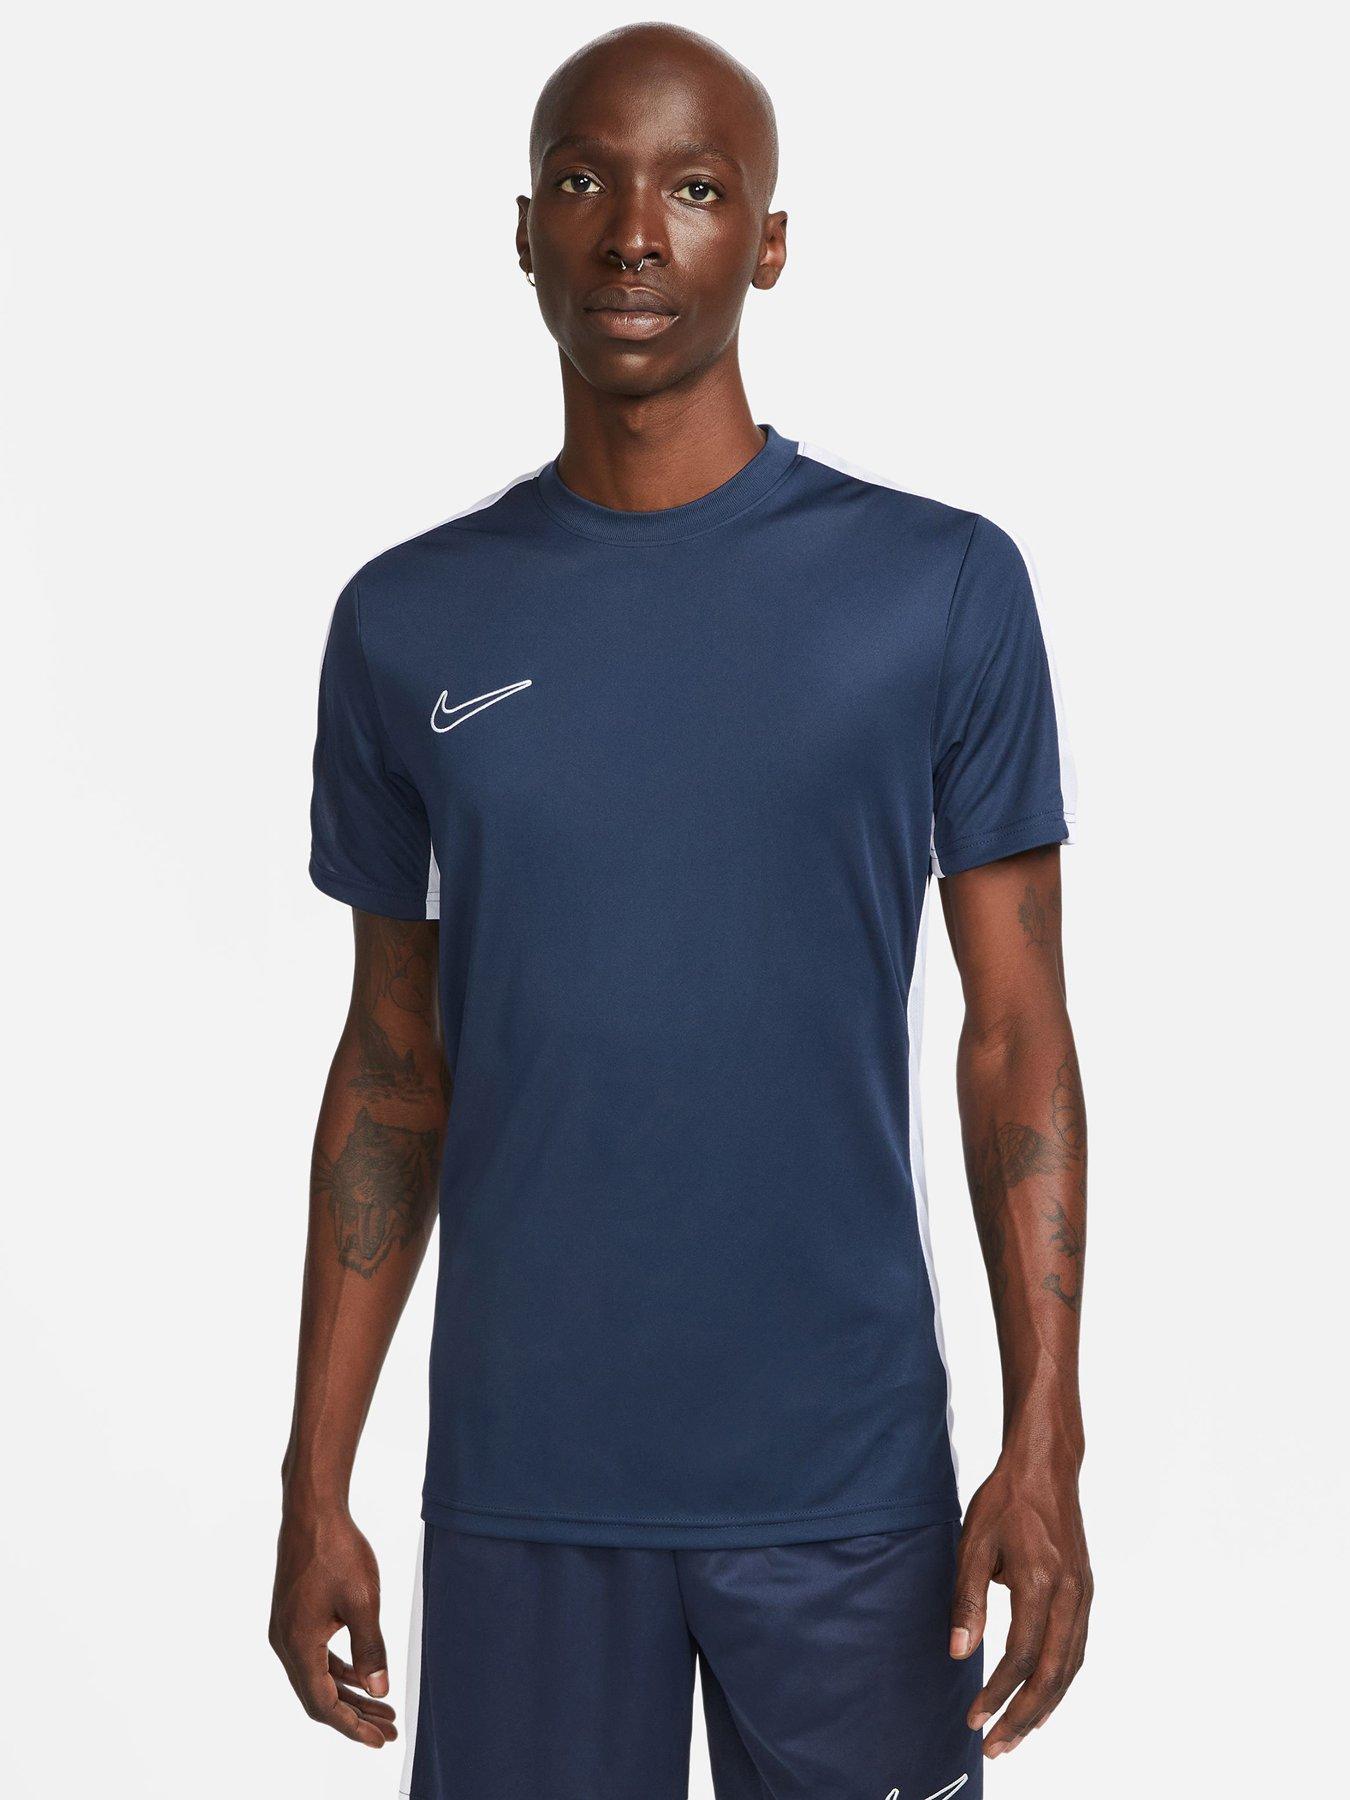 Men's Nike T Shirts | Nike Fit T Shirts Tops | Very.co.uk